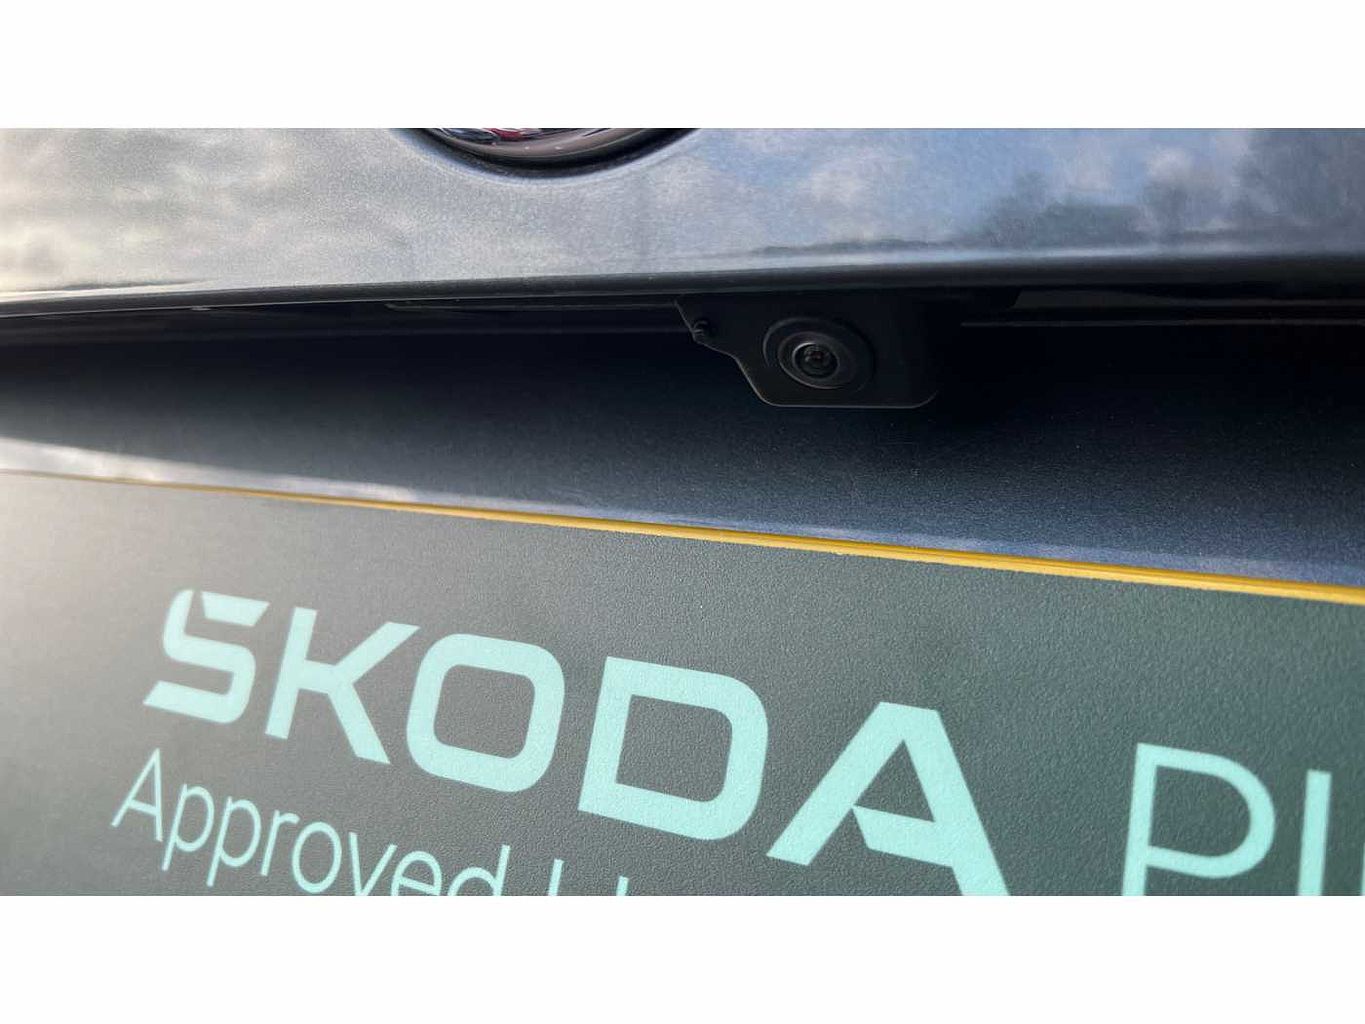 SKODA Kodiaq 1.4 TSI (150ps) 4X4 Edition (7 Seats) SUV